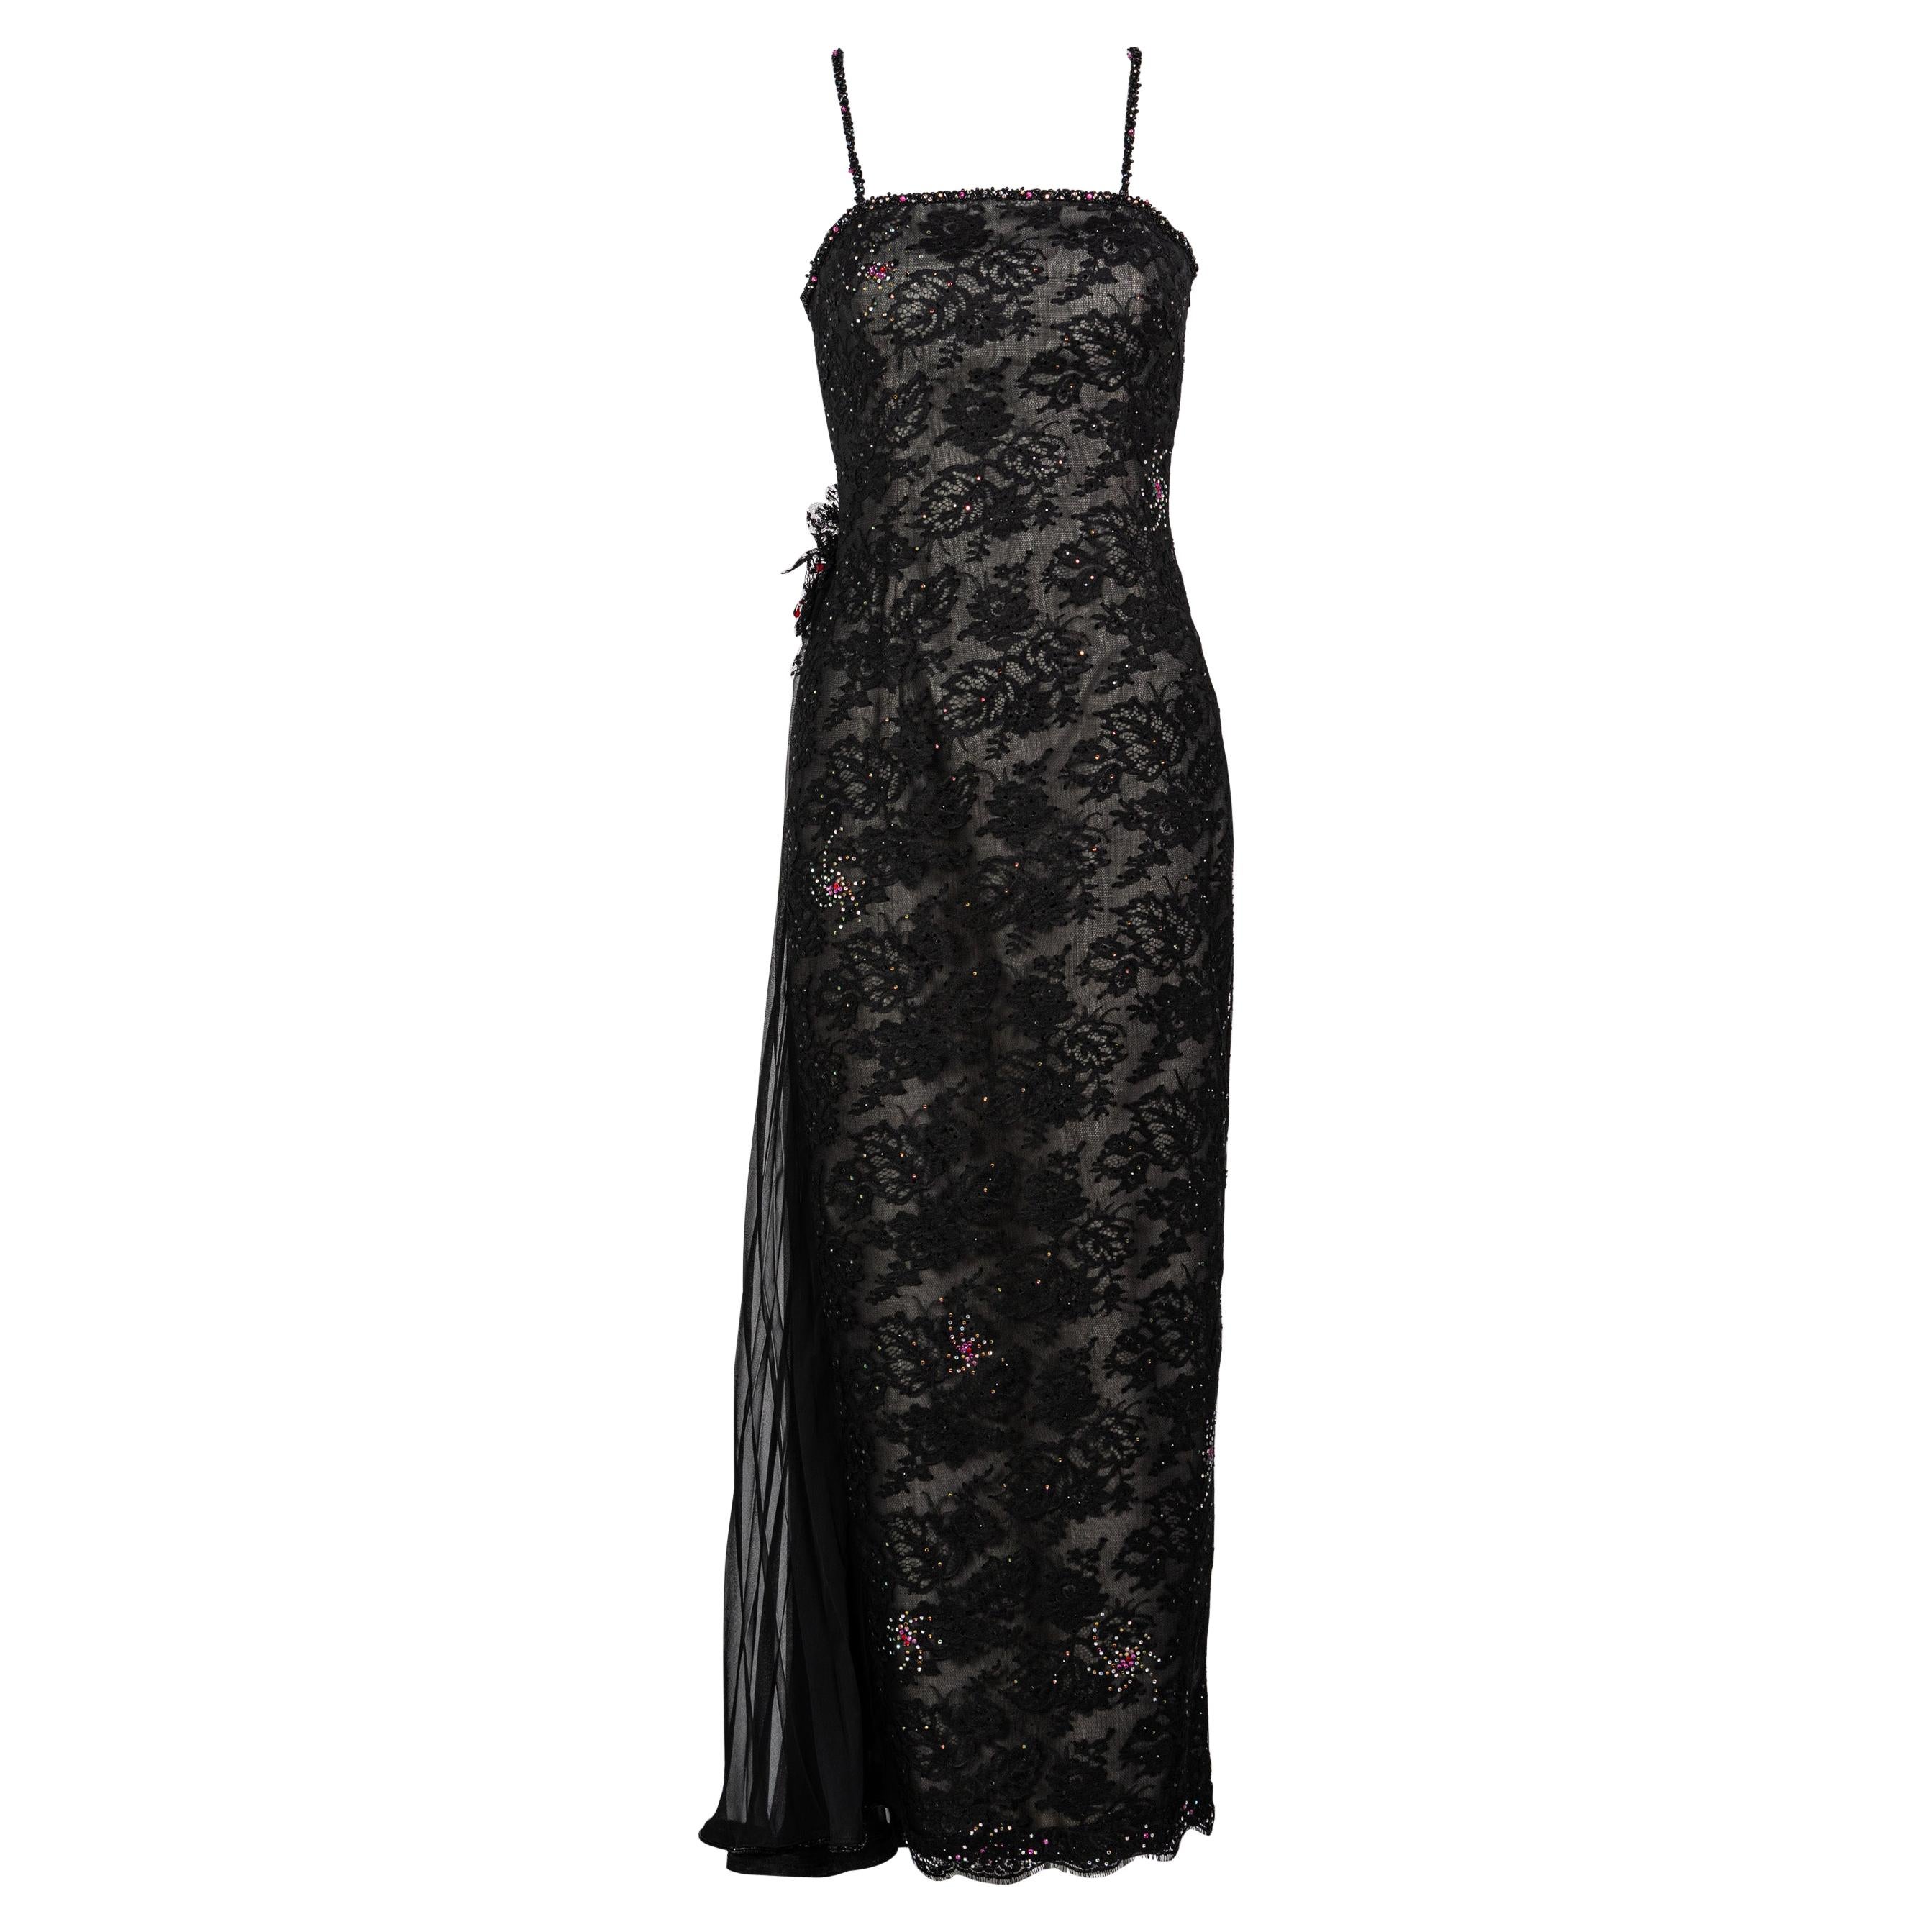 Vintage Sam Carlin Saks Fifth Avenue Black Lace Gown For Sale